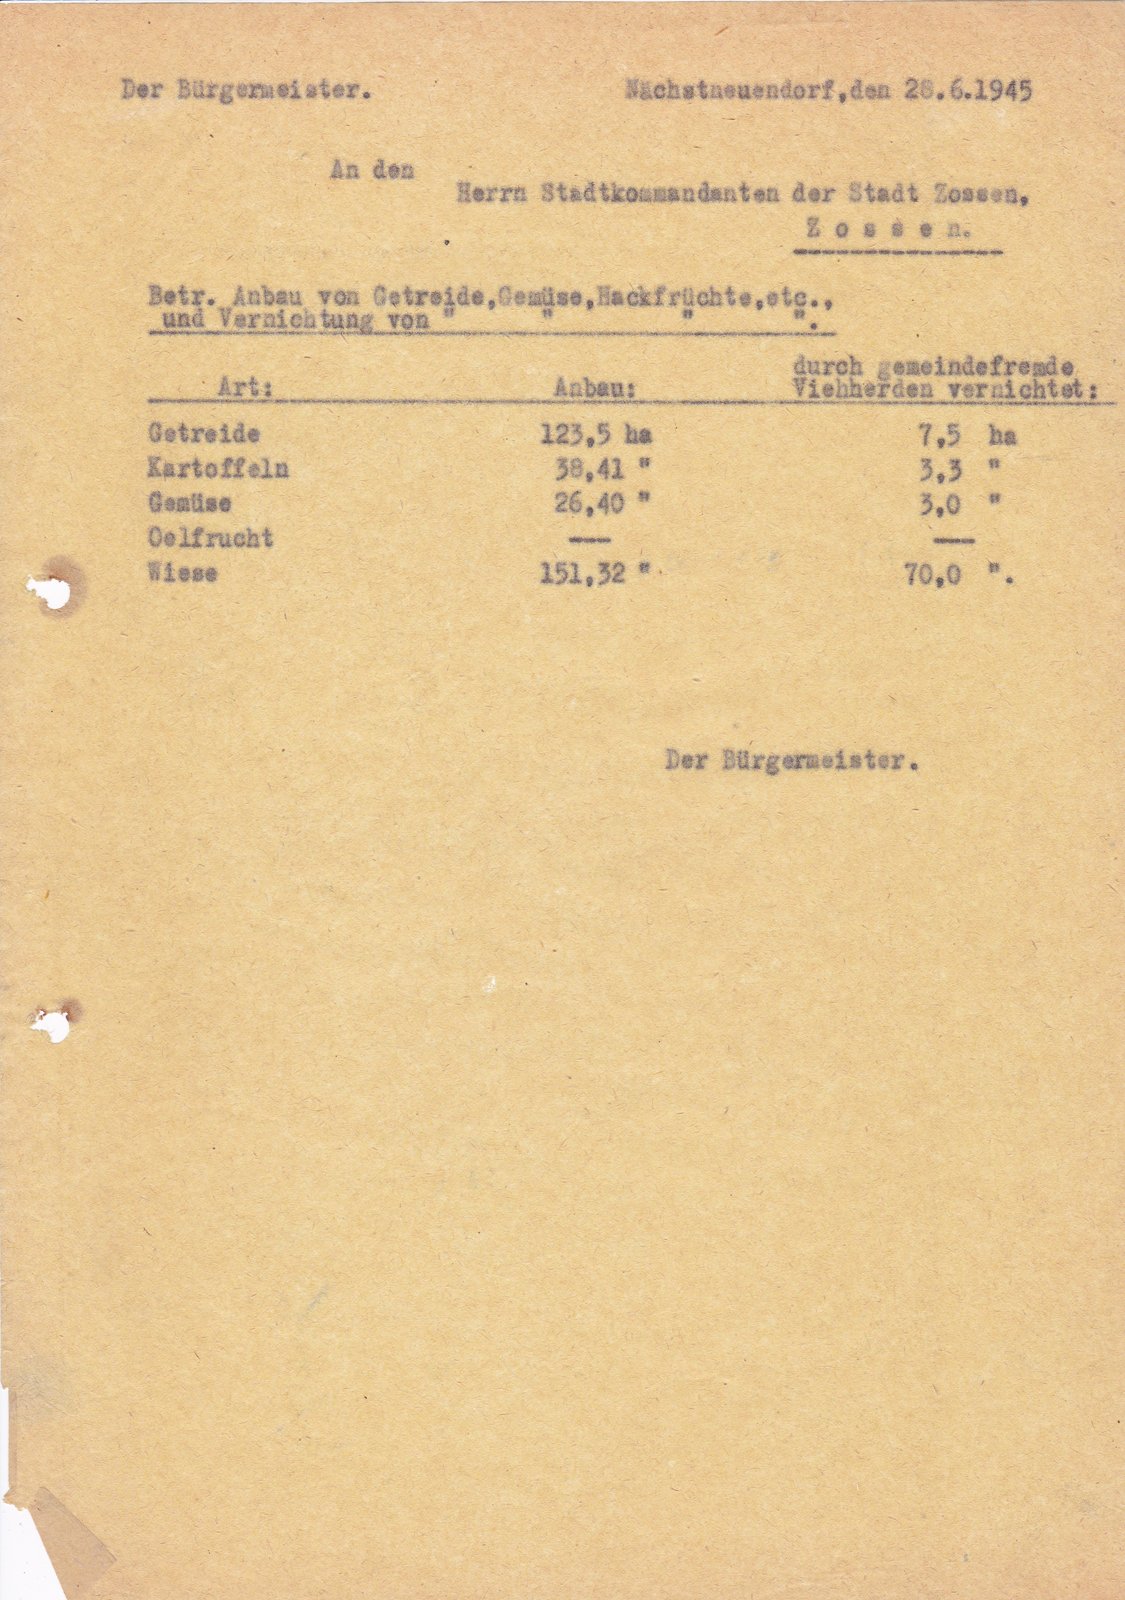 BM N. Neuendorf an Stadtkommandant, 28.06.1945 (Heimatverein "Alter Krug" Zossen e.V. CC BY-NC-SA)